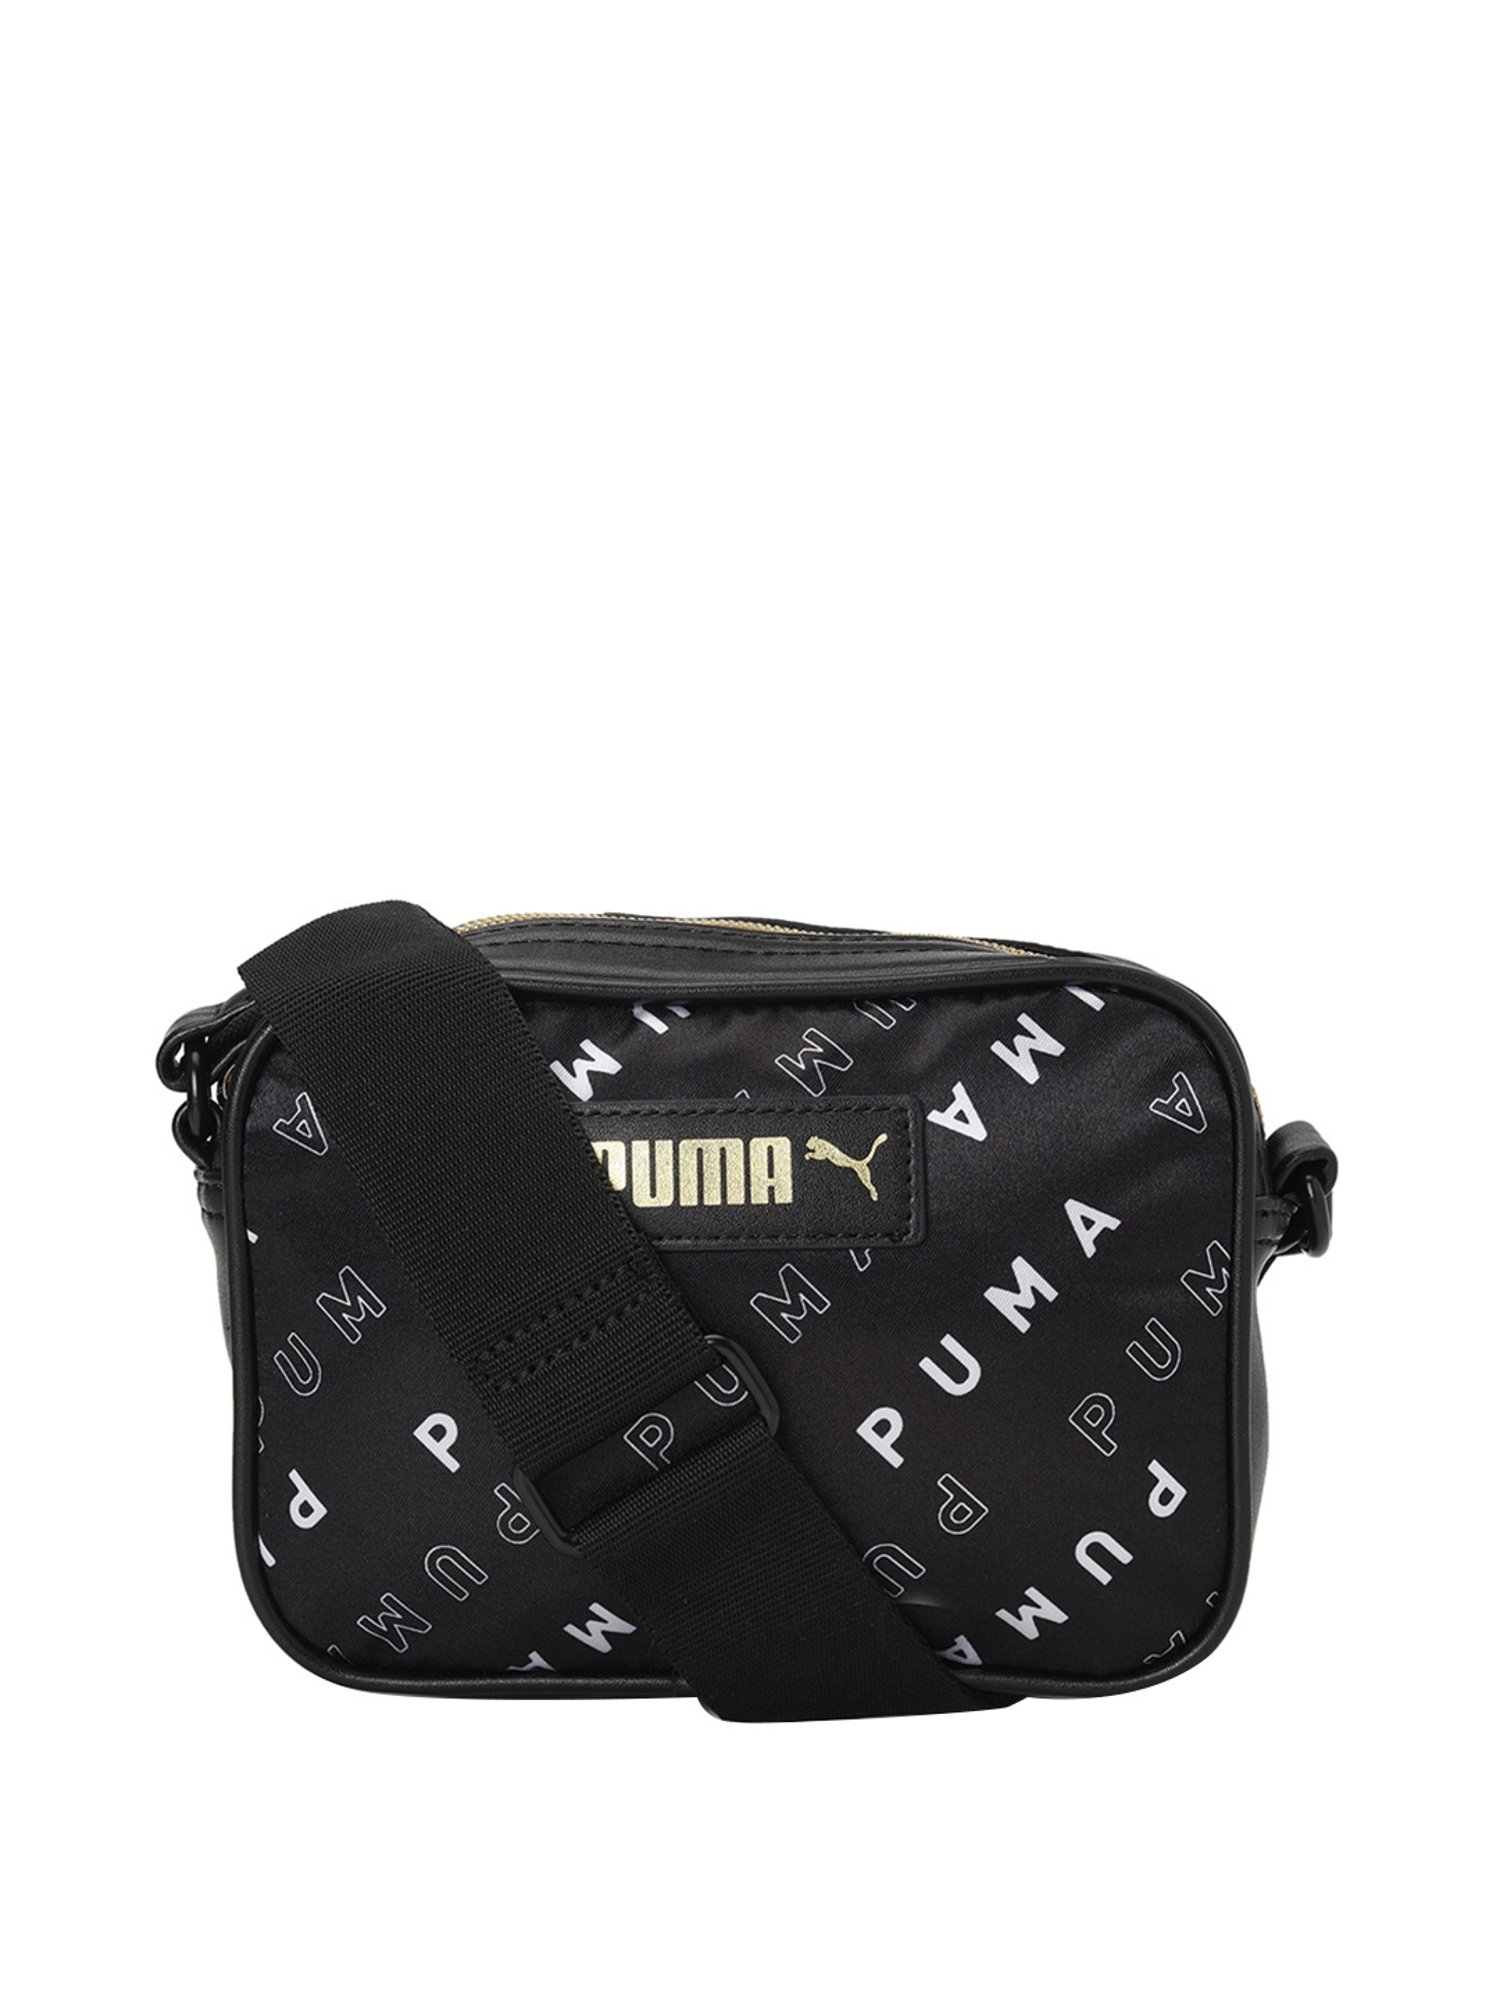 Buy Puma Pink Core Up Cross Body Bag online